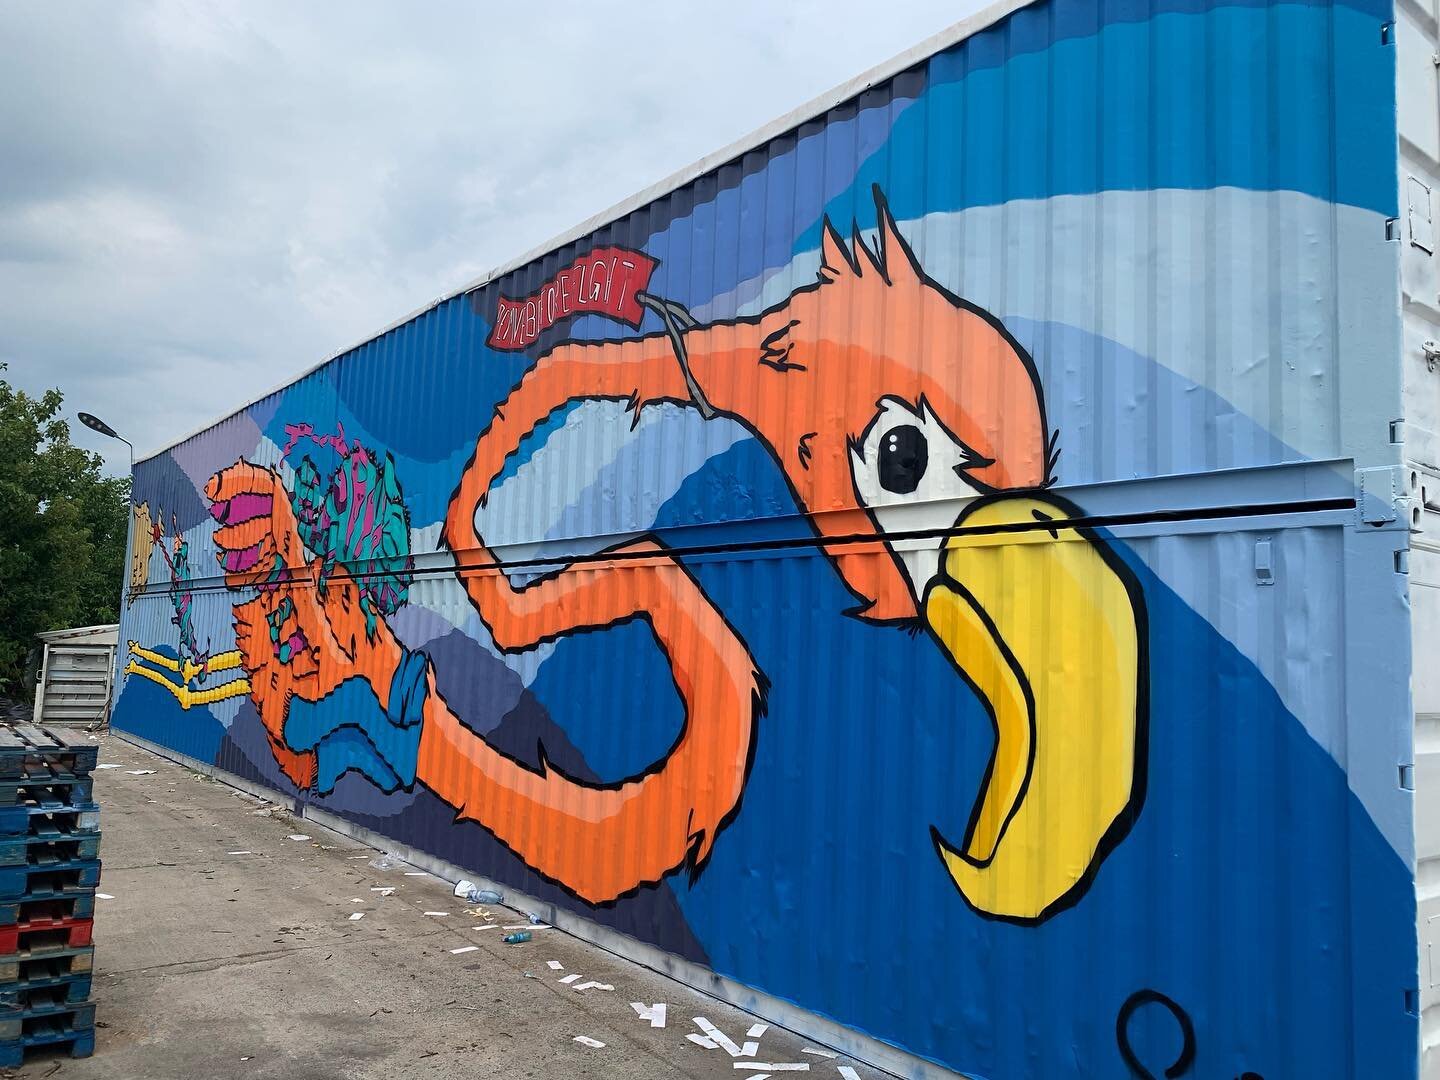 &ldquo;Flamingo transport&rdquo; - Spraypaint on Container Wall 26m x 5.8m

#mural #muralart #streetart #spraypaint #muralist #wallart #muralproject #art #urbanart #muralartist #painting #illustration
#dailymural #artistoninstagram #murallife #makear